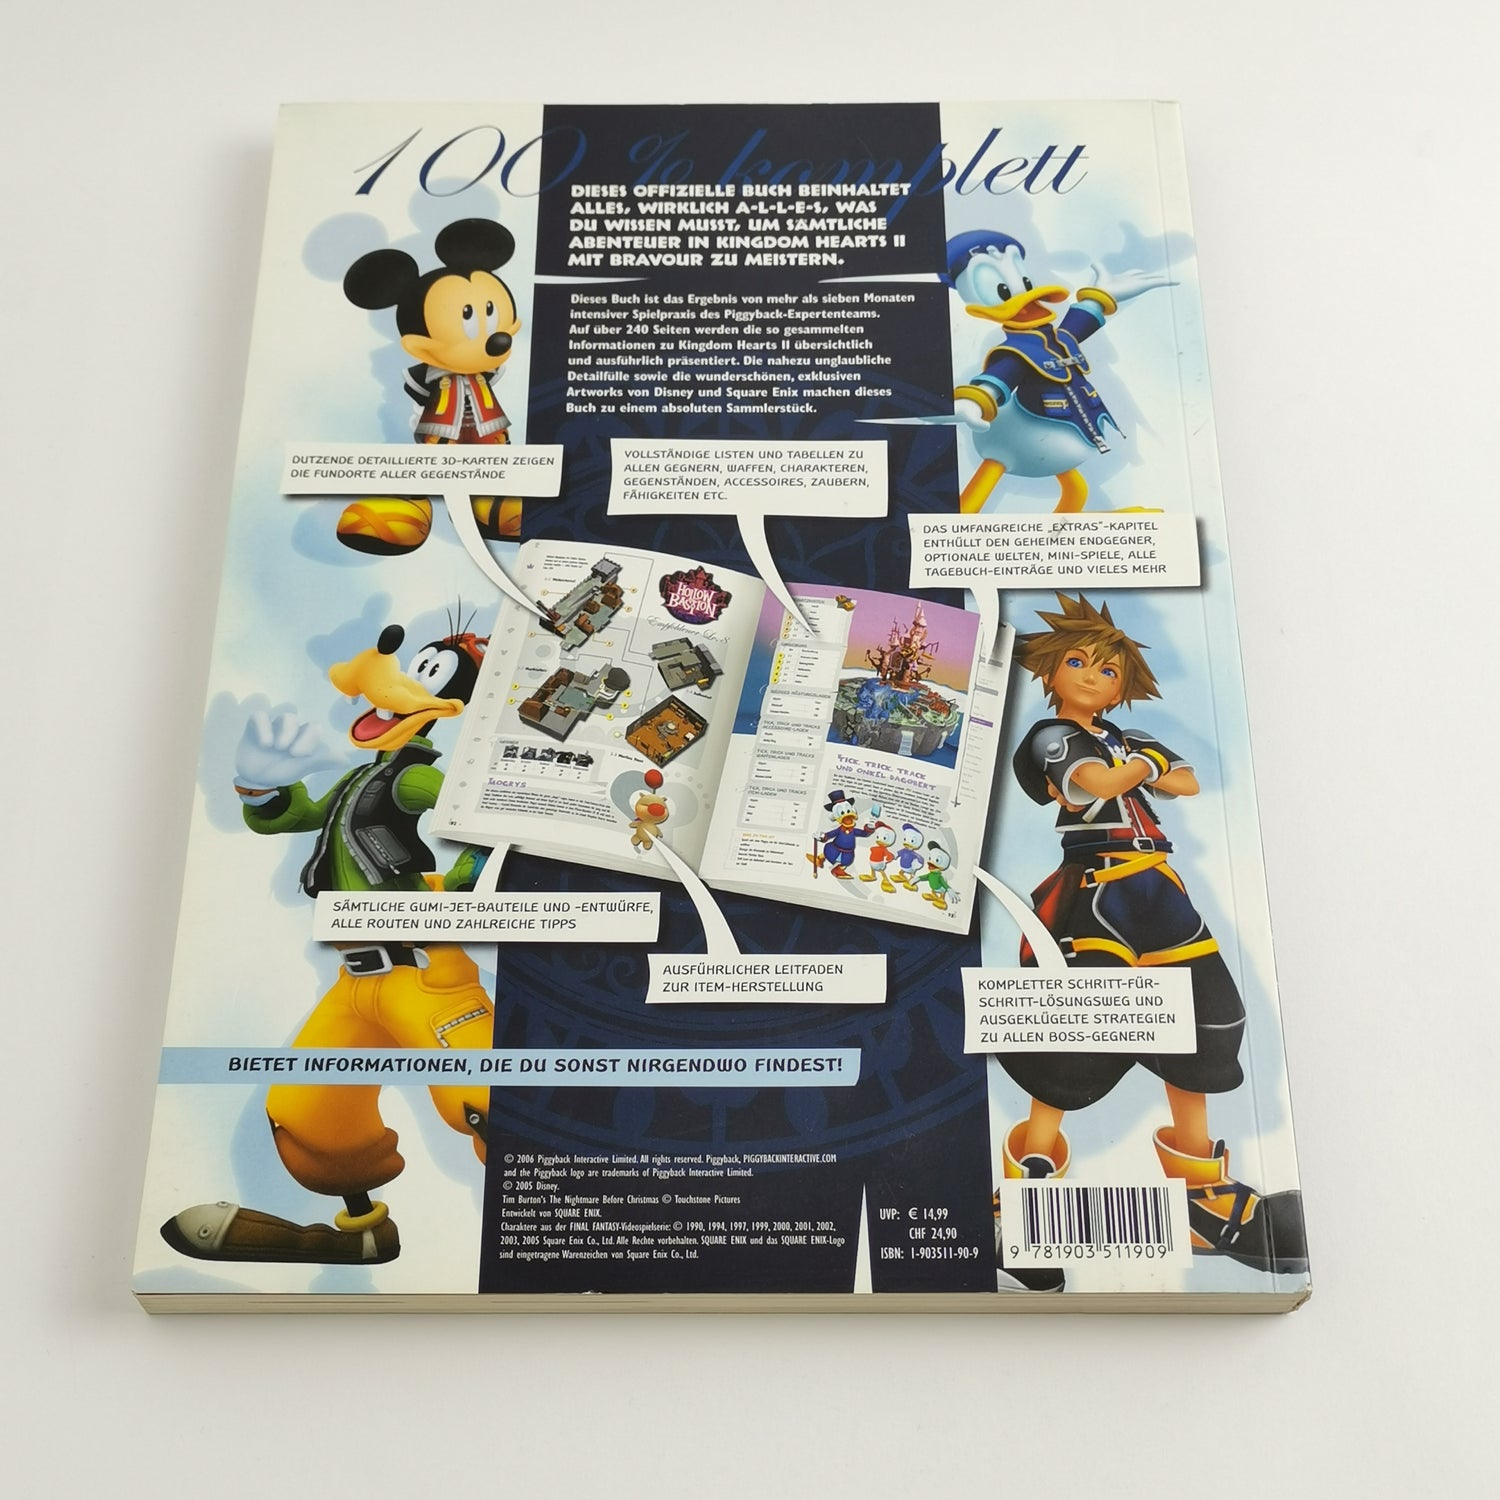 Sony Playstation 2 Spiel : Kingdom Hearts 2 + Lösungsbuch / Guide | PS2 OVP PAL